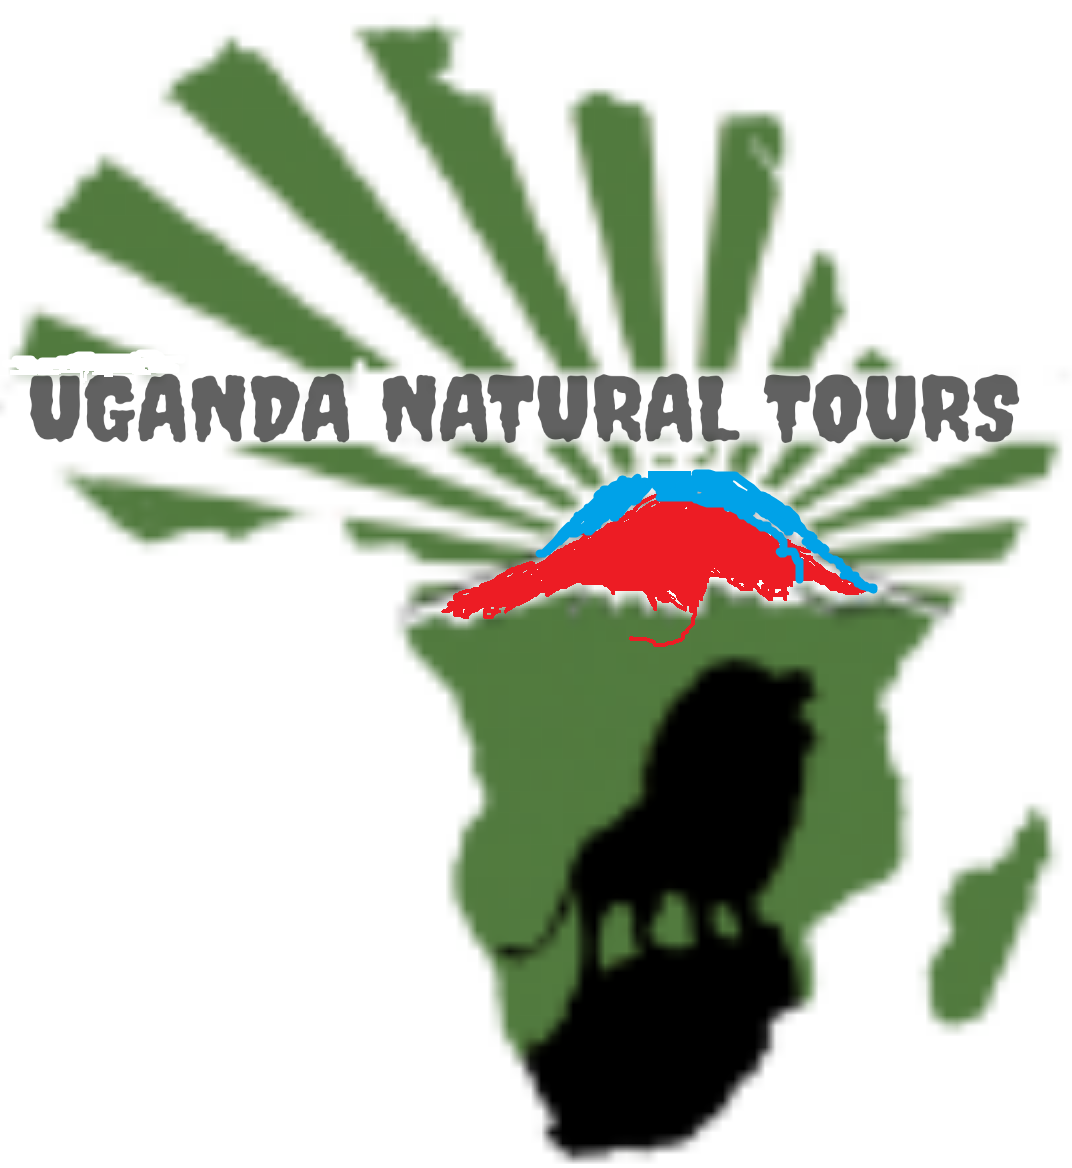 Uganda Natural Tours